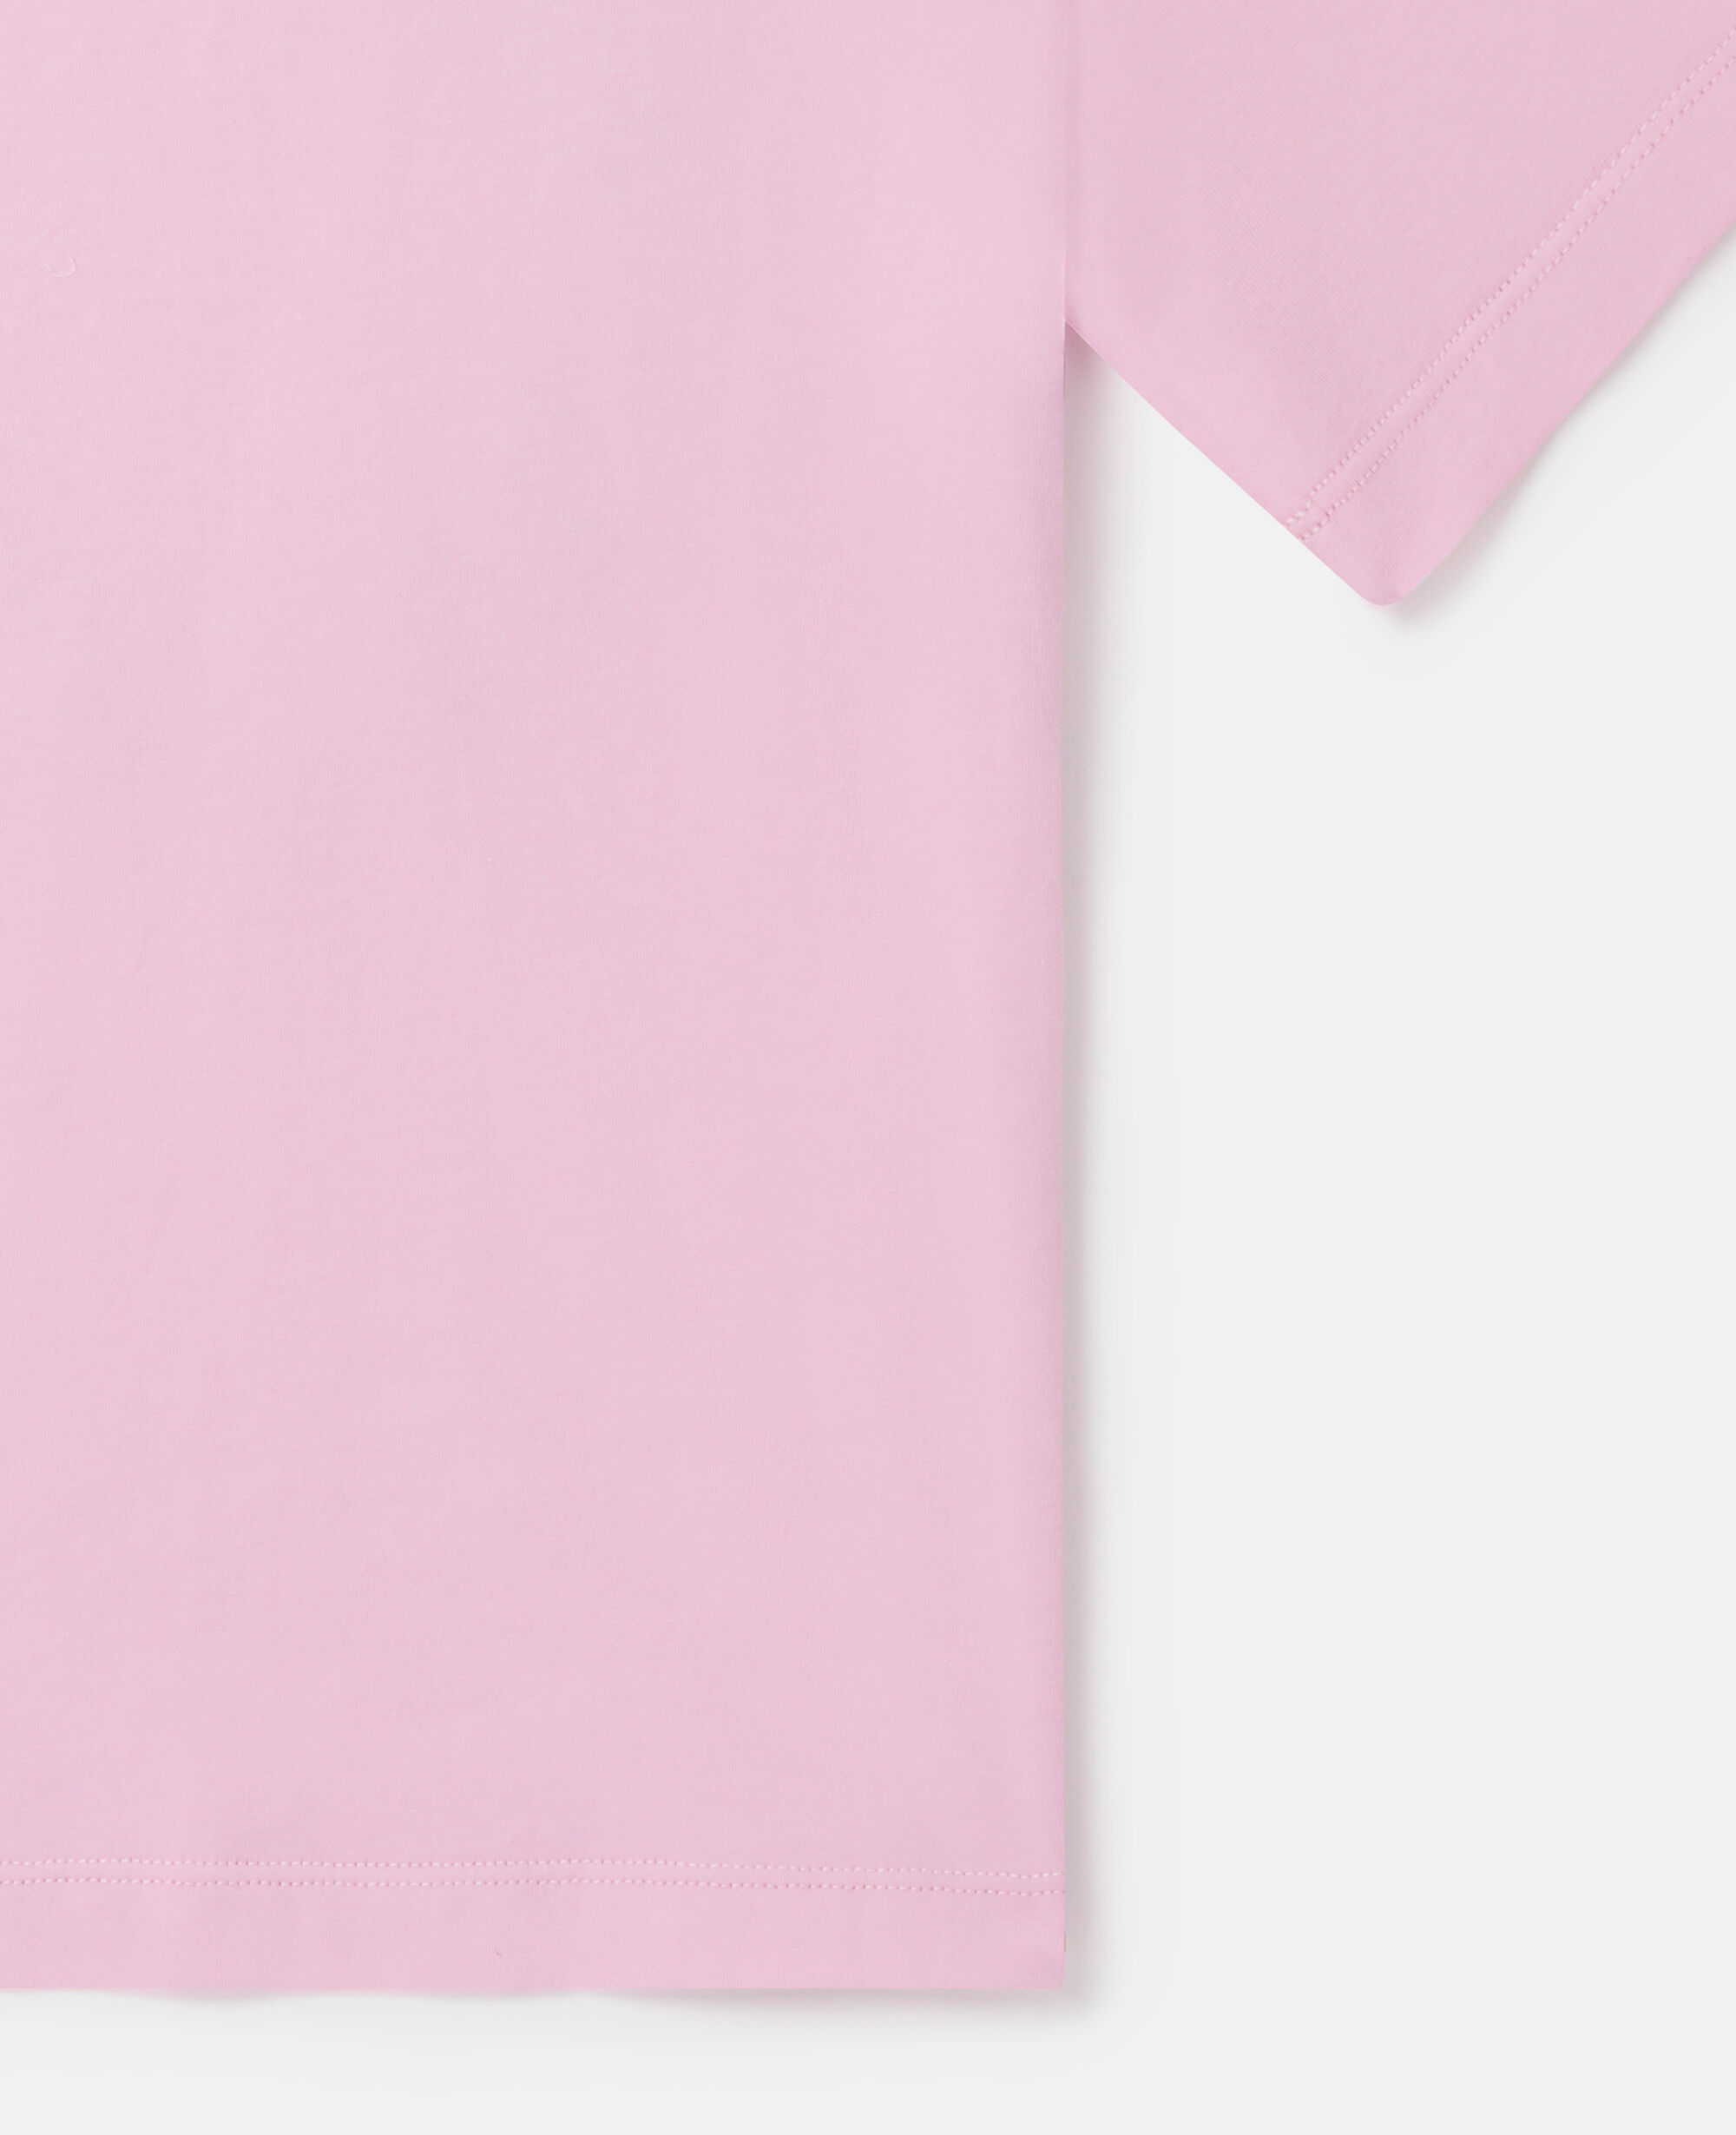 Girls T-Shirts | Tops & Logo T-Shirts | Stella McCartney Kids US